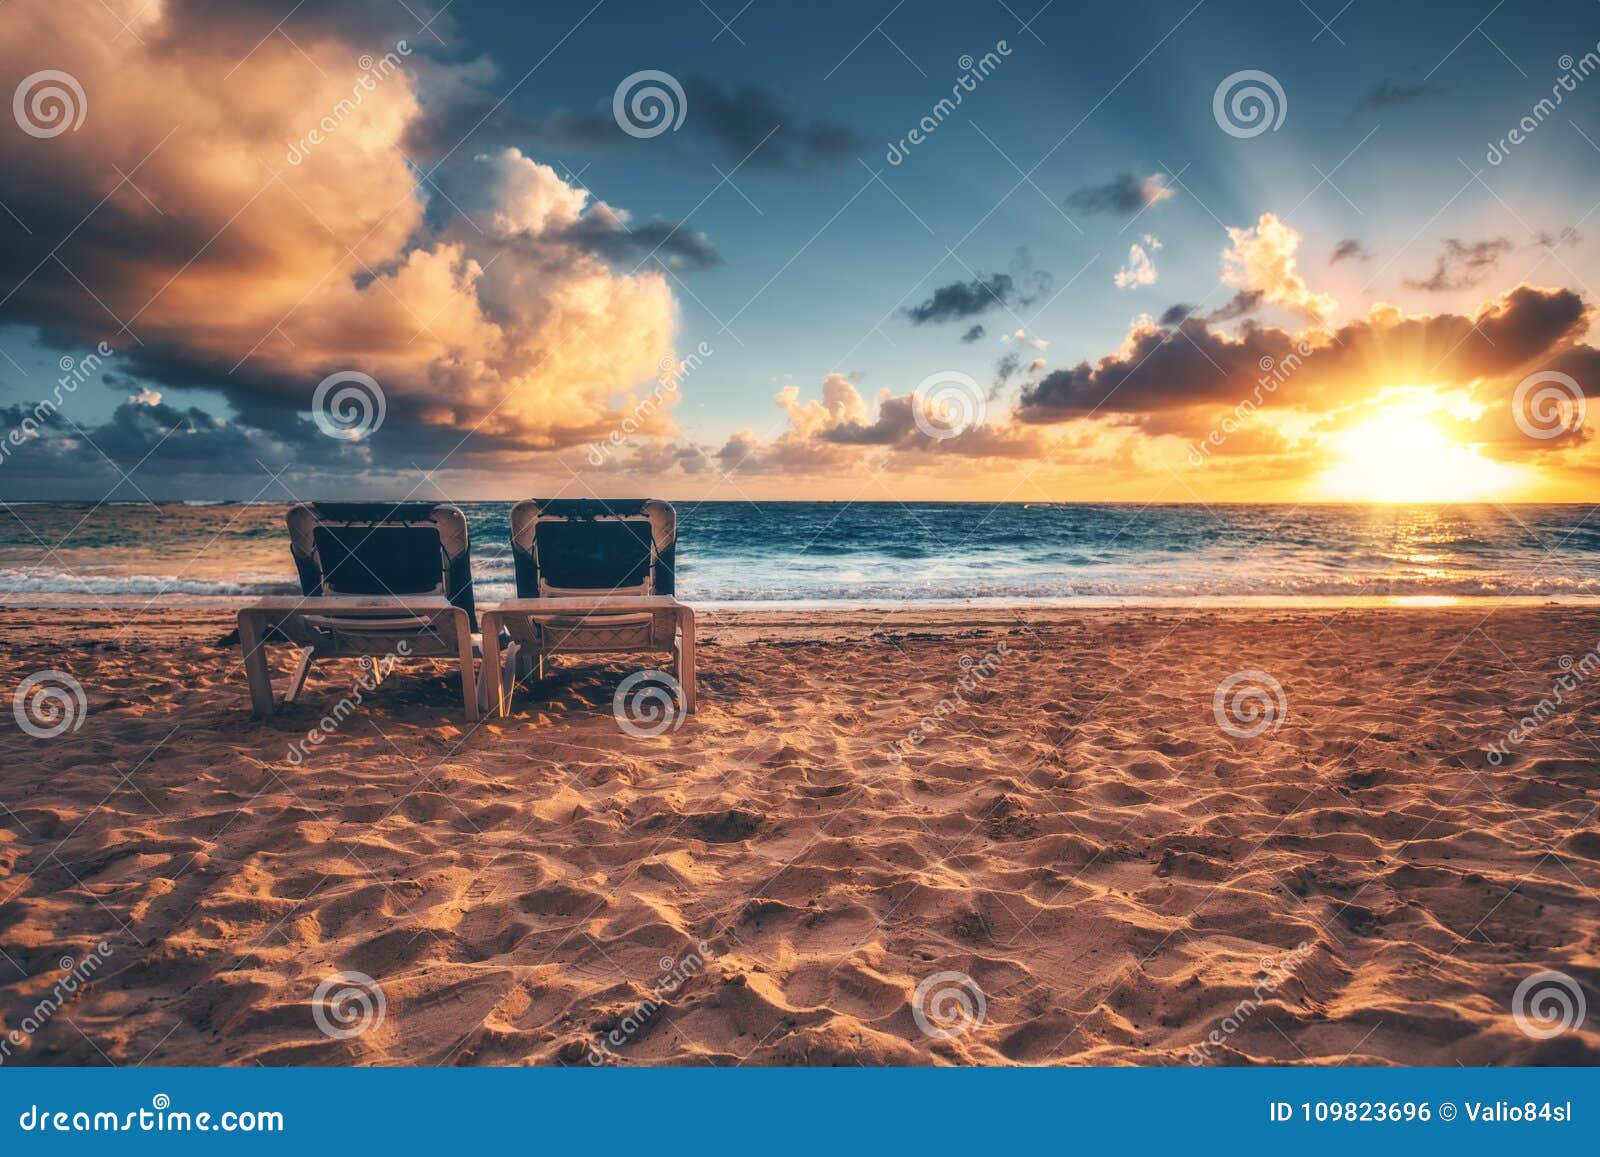 Sunrise Beach Chairs On The Tropical Caribbean Beach Stock Photo Image Of Beach Island